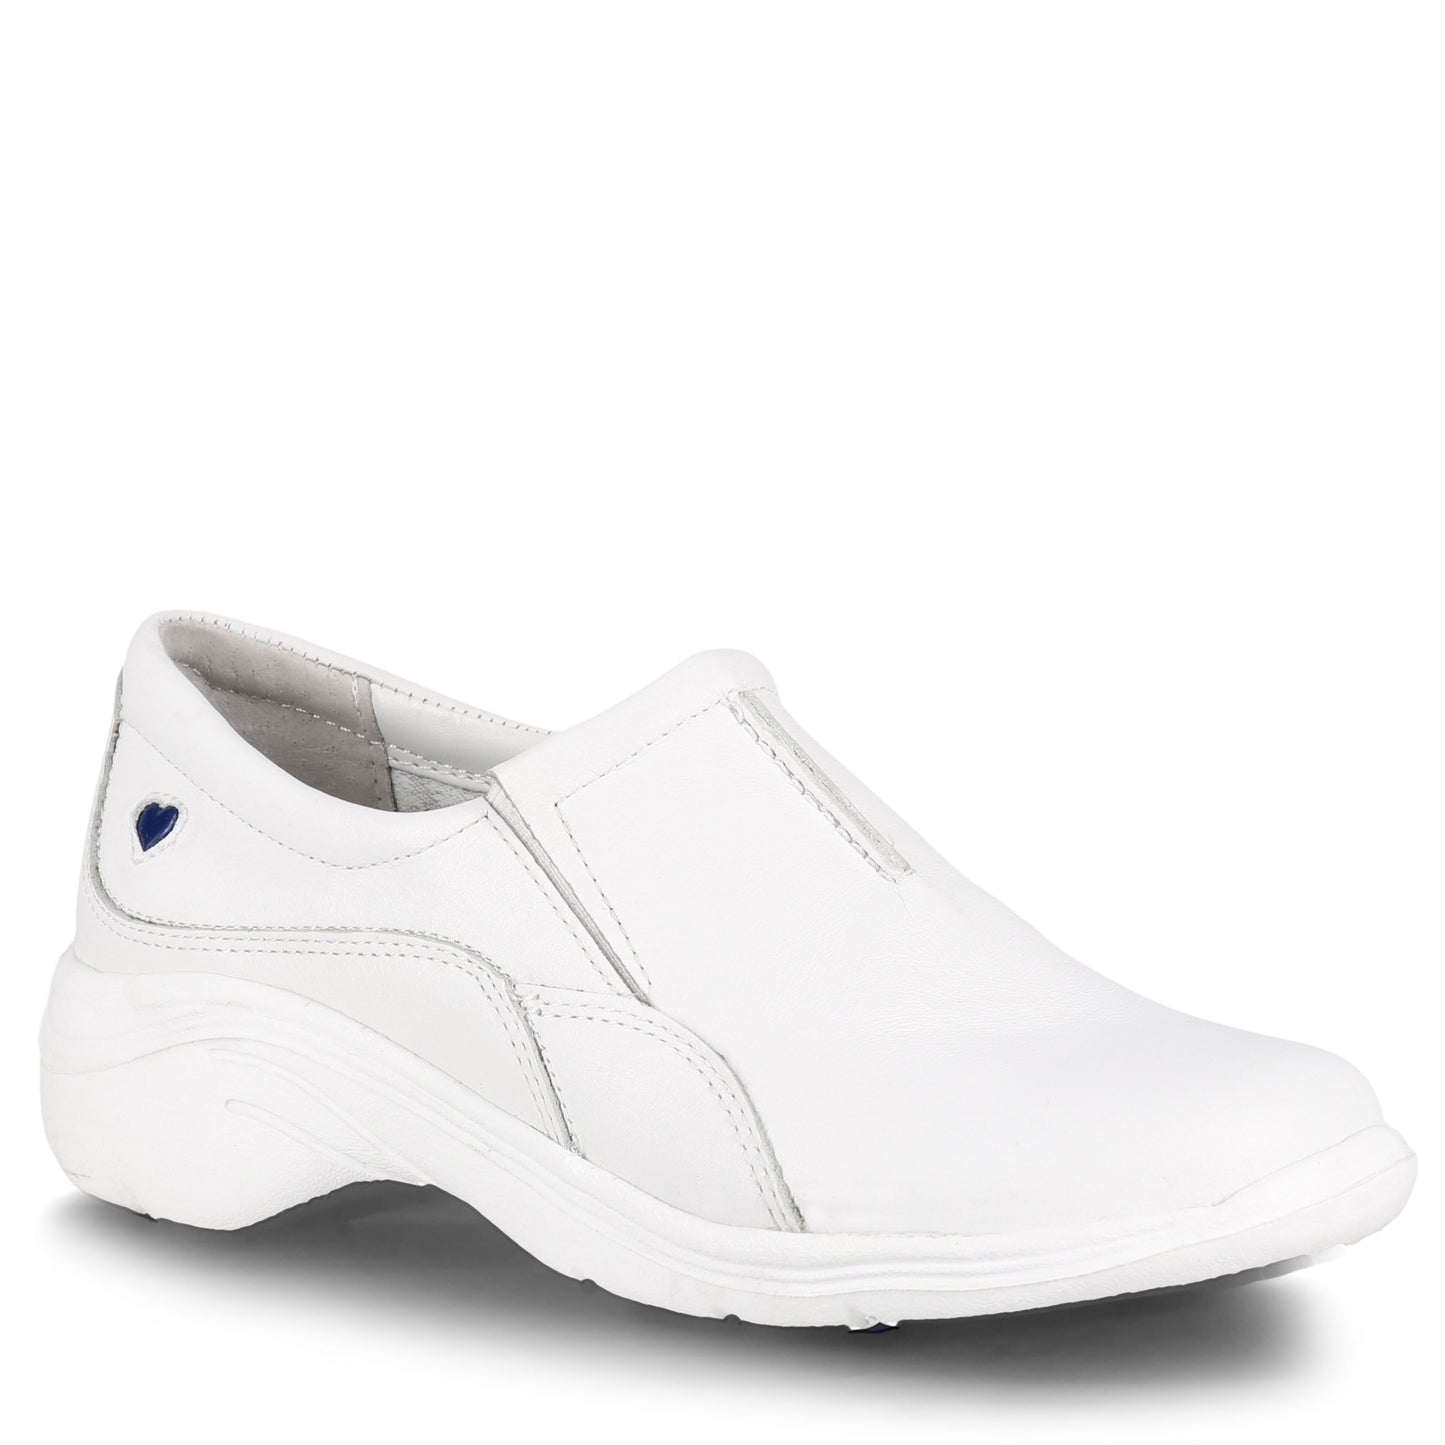 Nursemates Doreen White Shoes